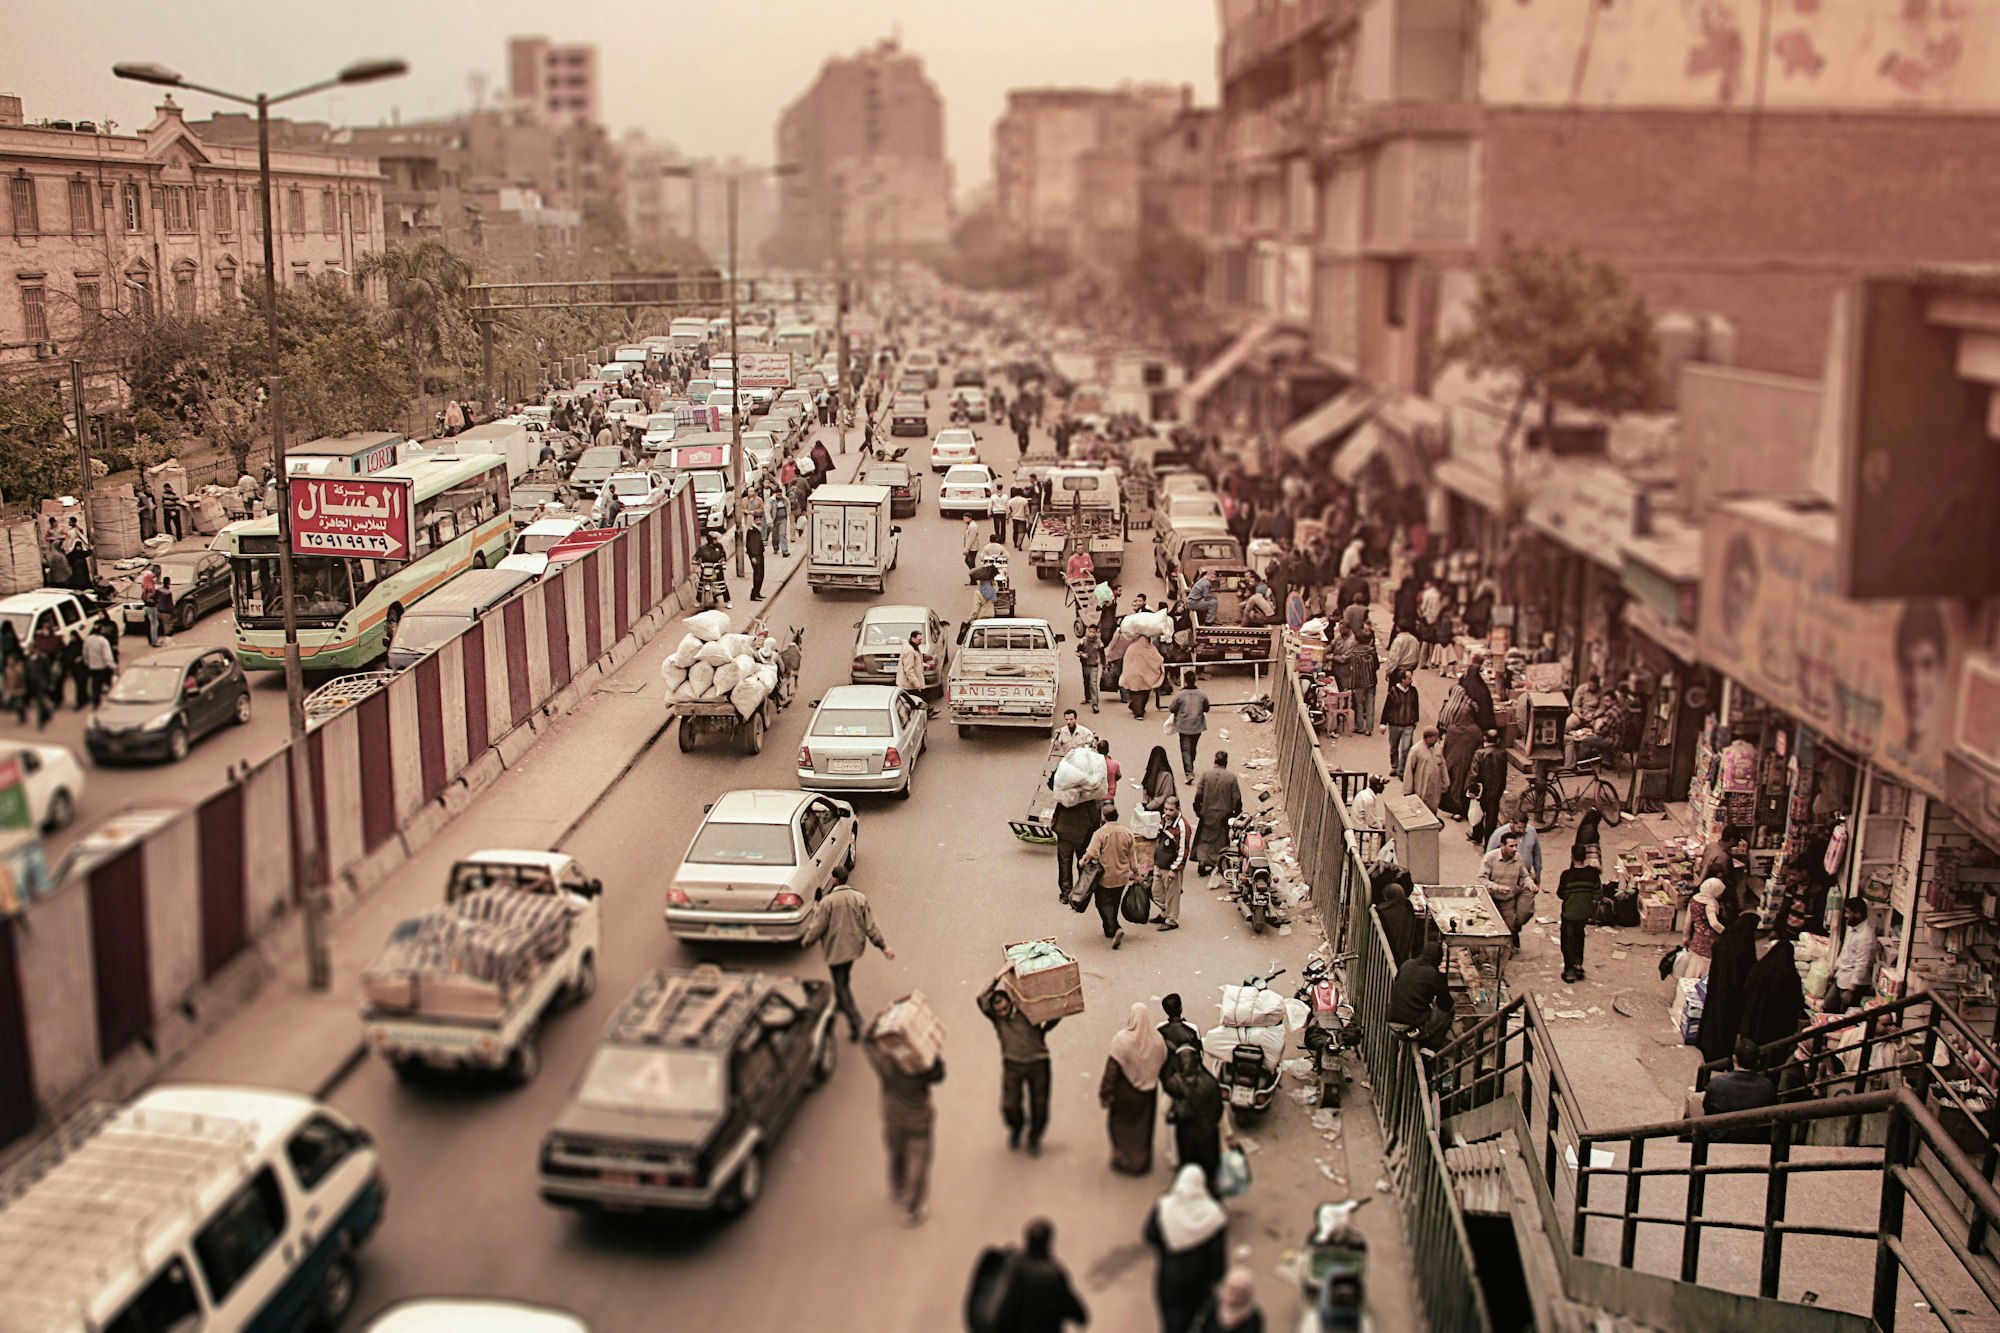 Zahma in Cairo: The Social Cost of Traffic Jams